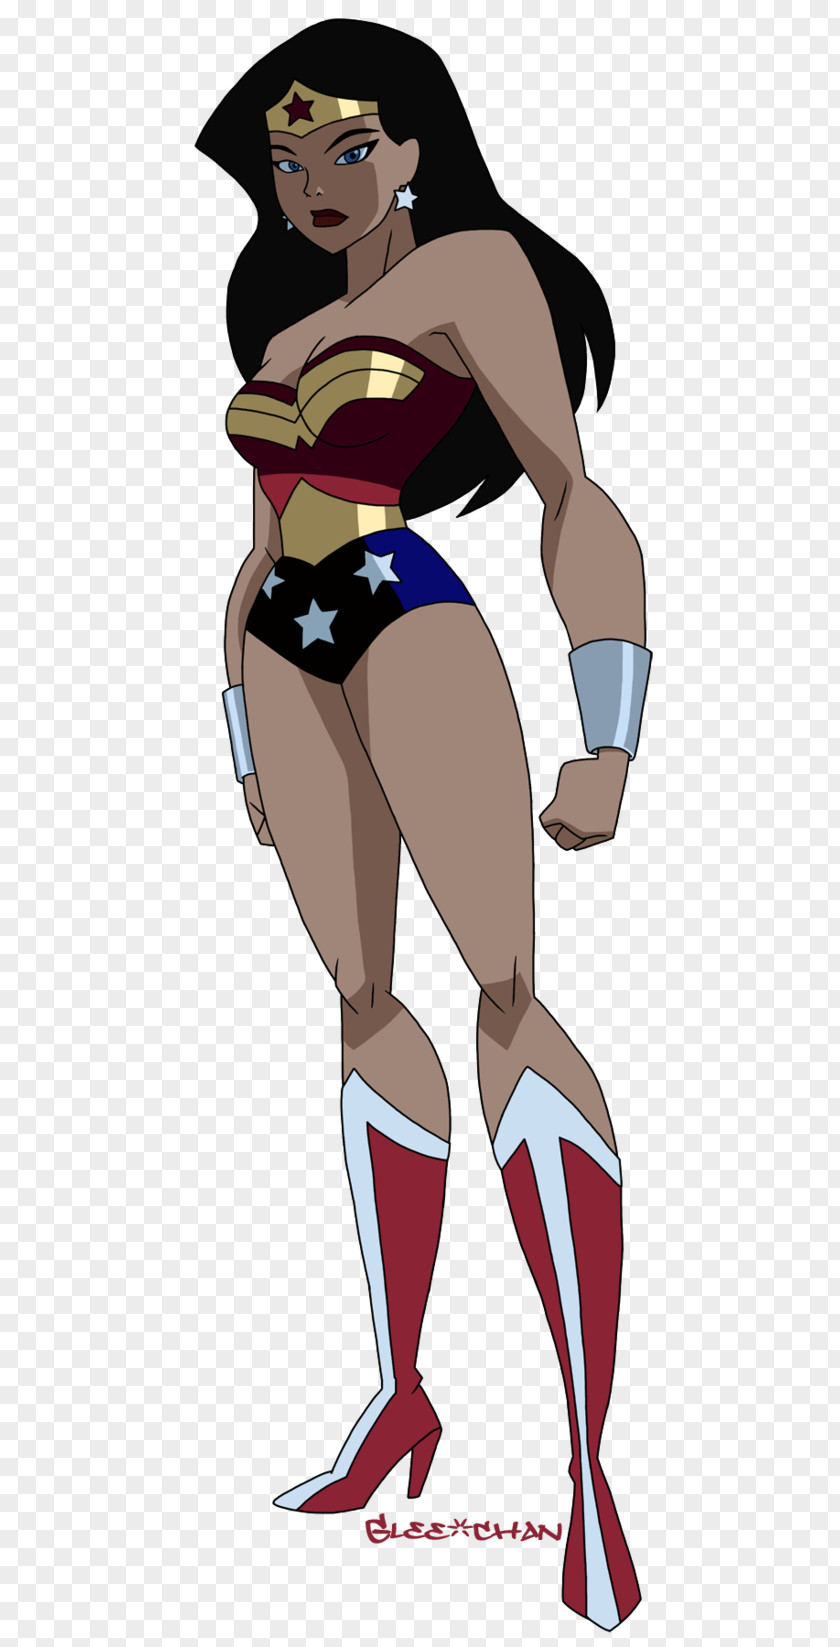 Comics Justice League Unlimited Susan Eisenberg Wonder Woman Black Canary Superhero PNG